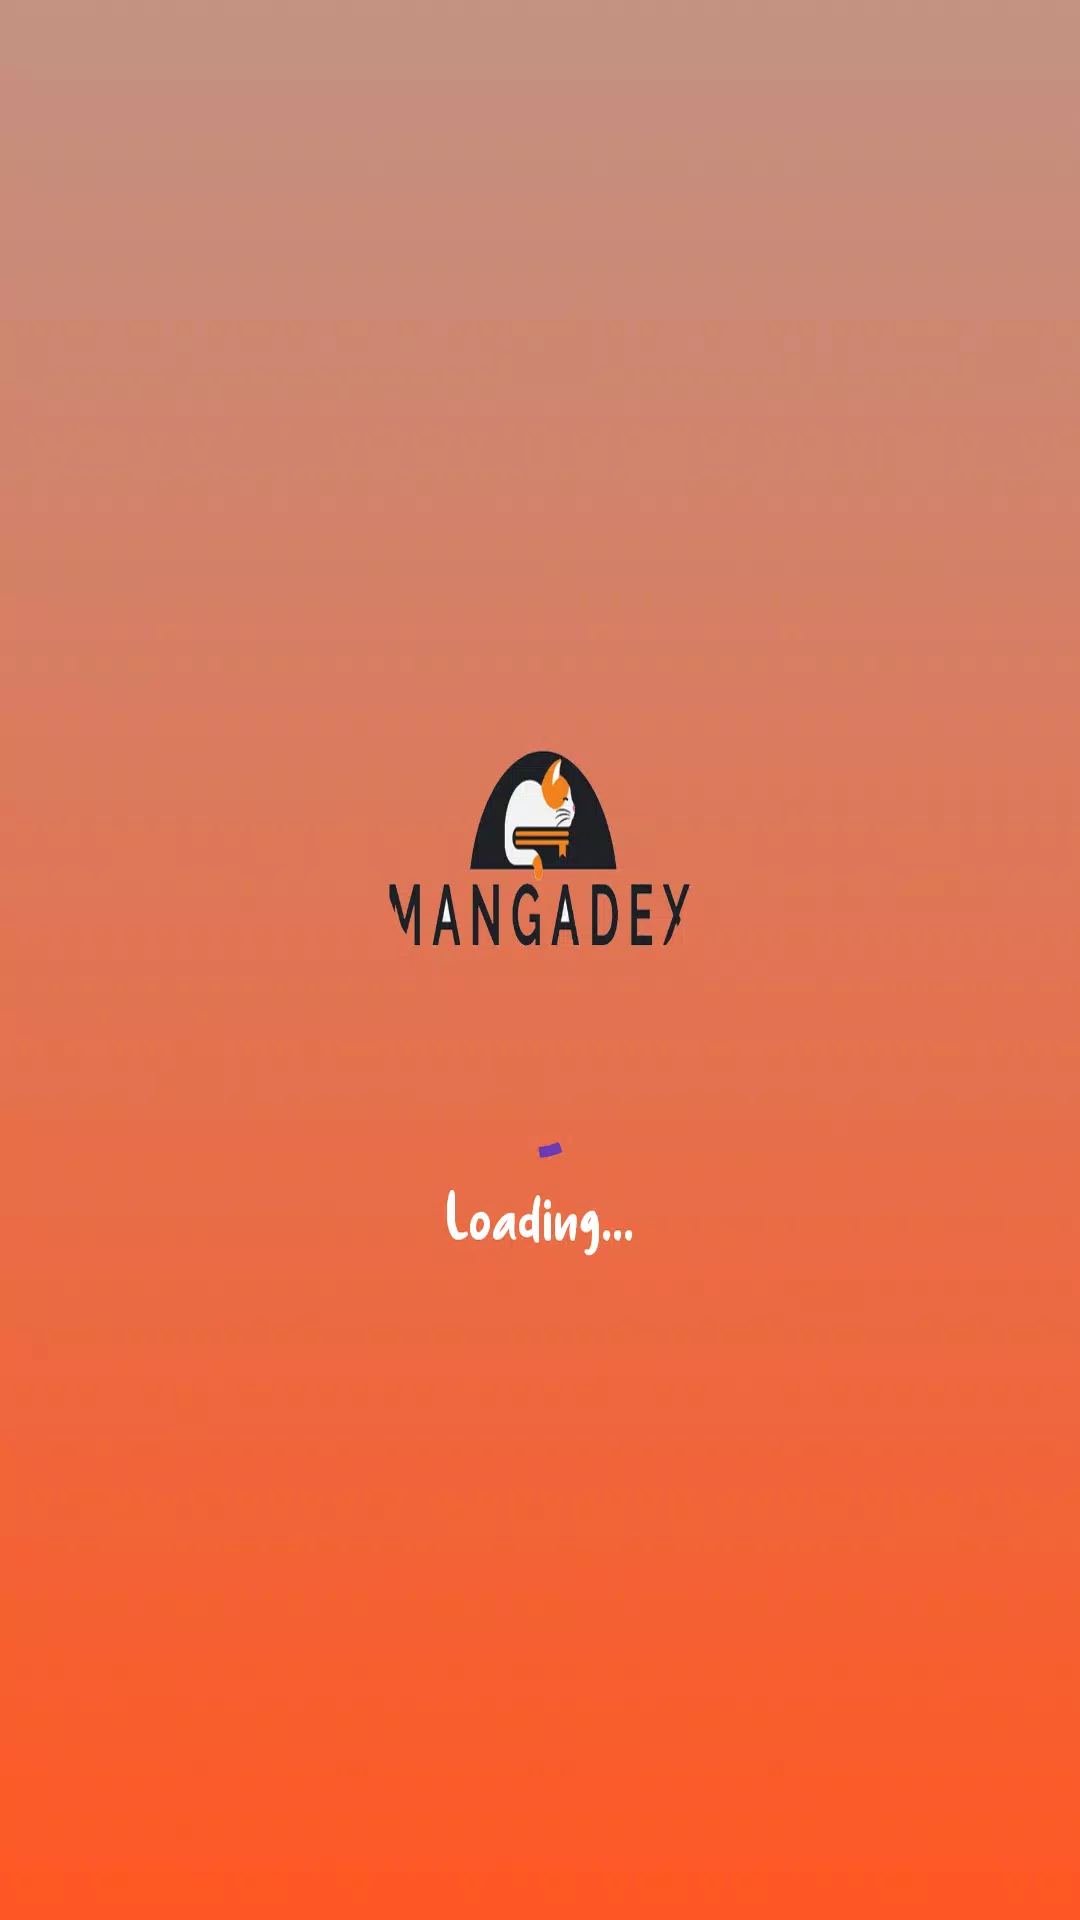 Loading - MangaDex